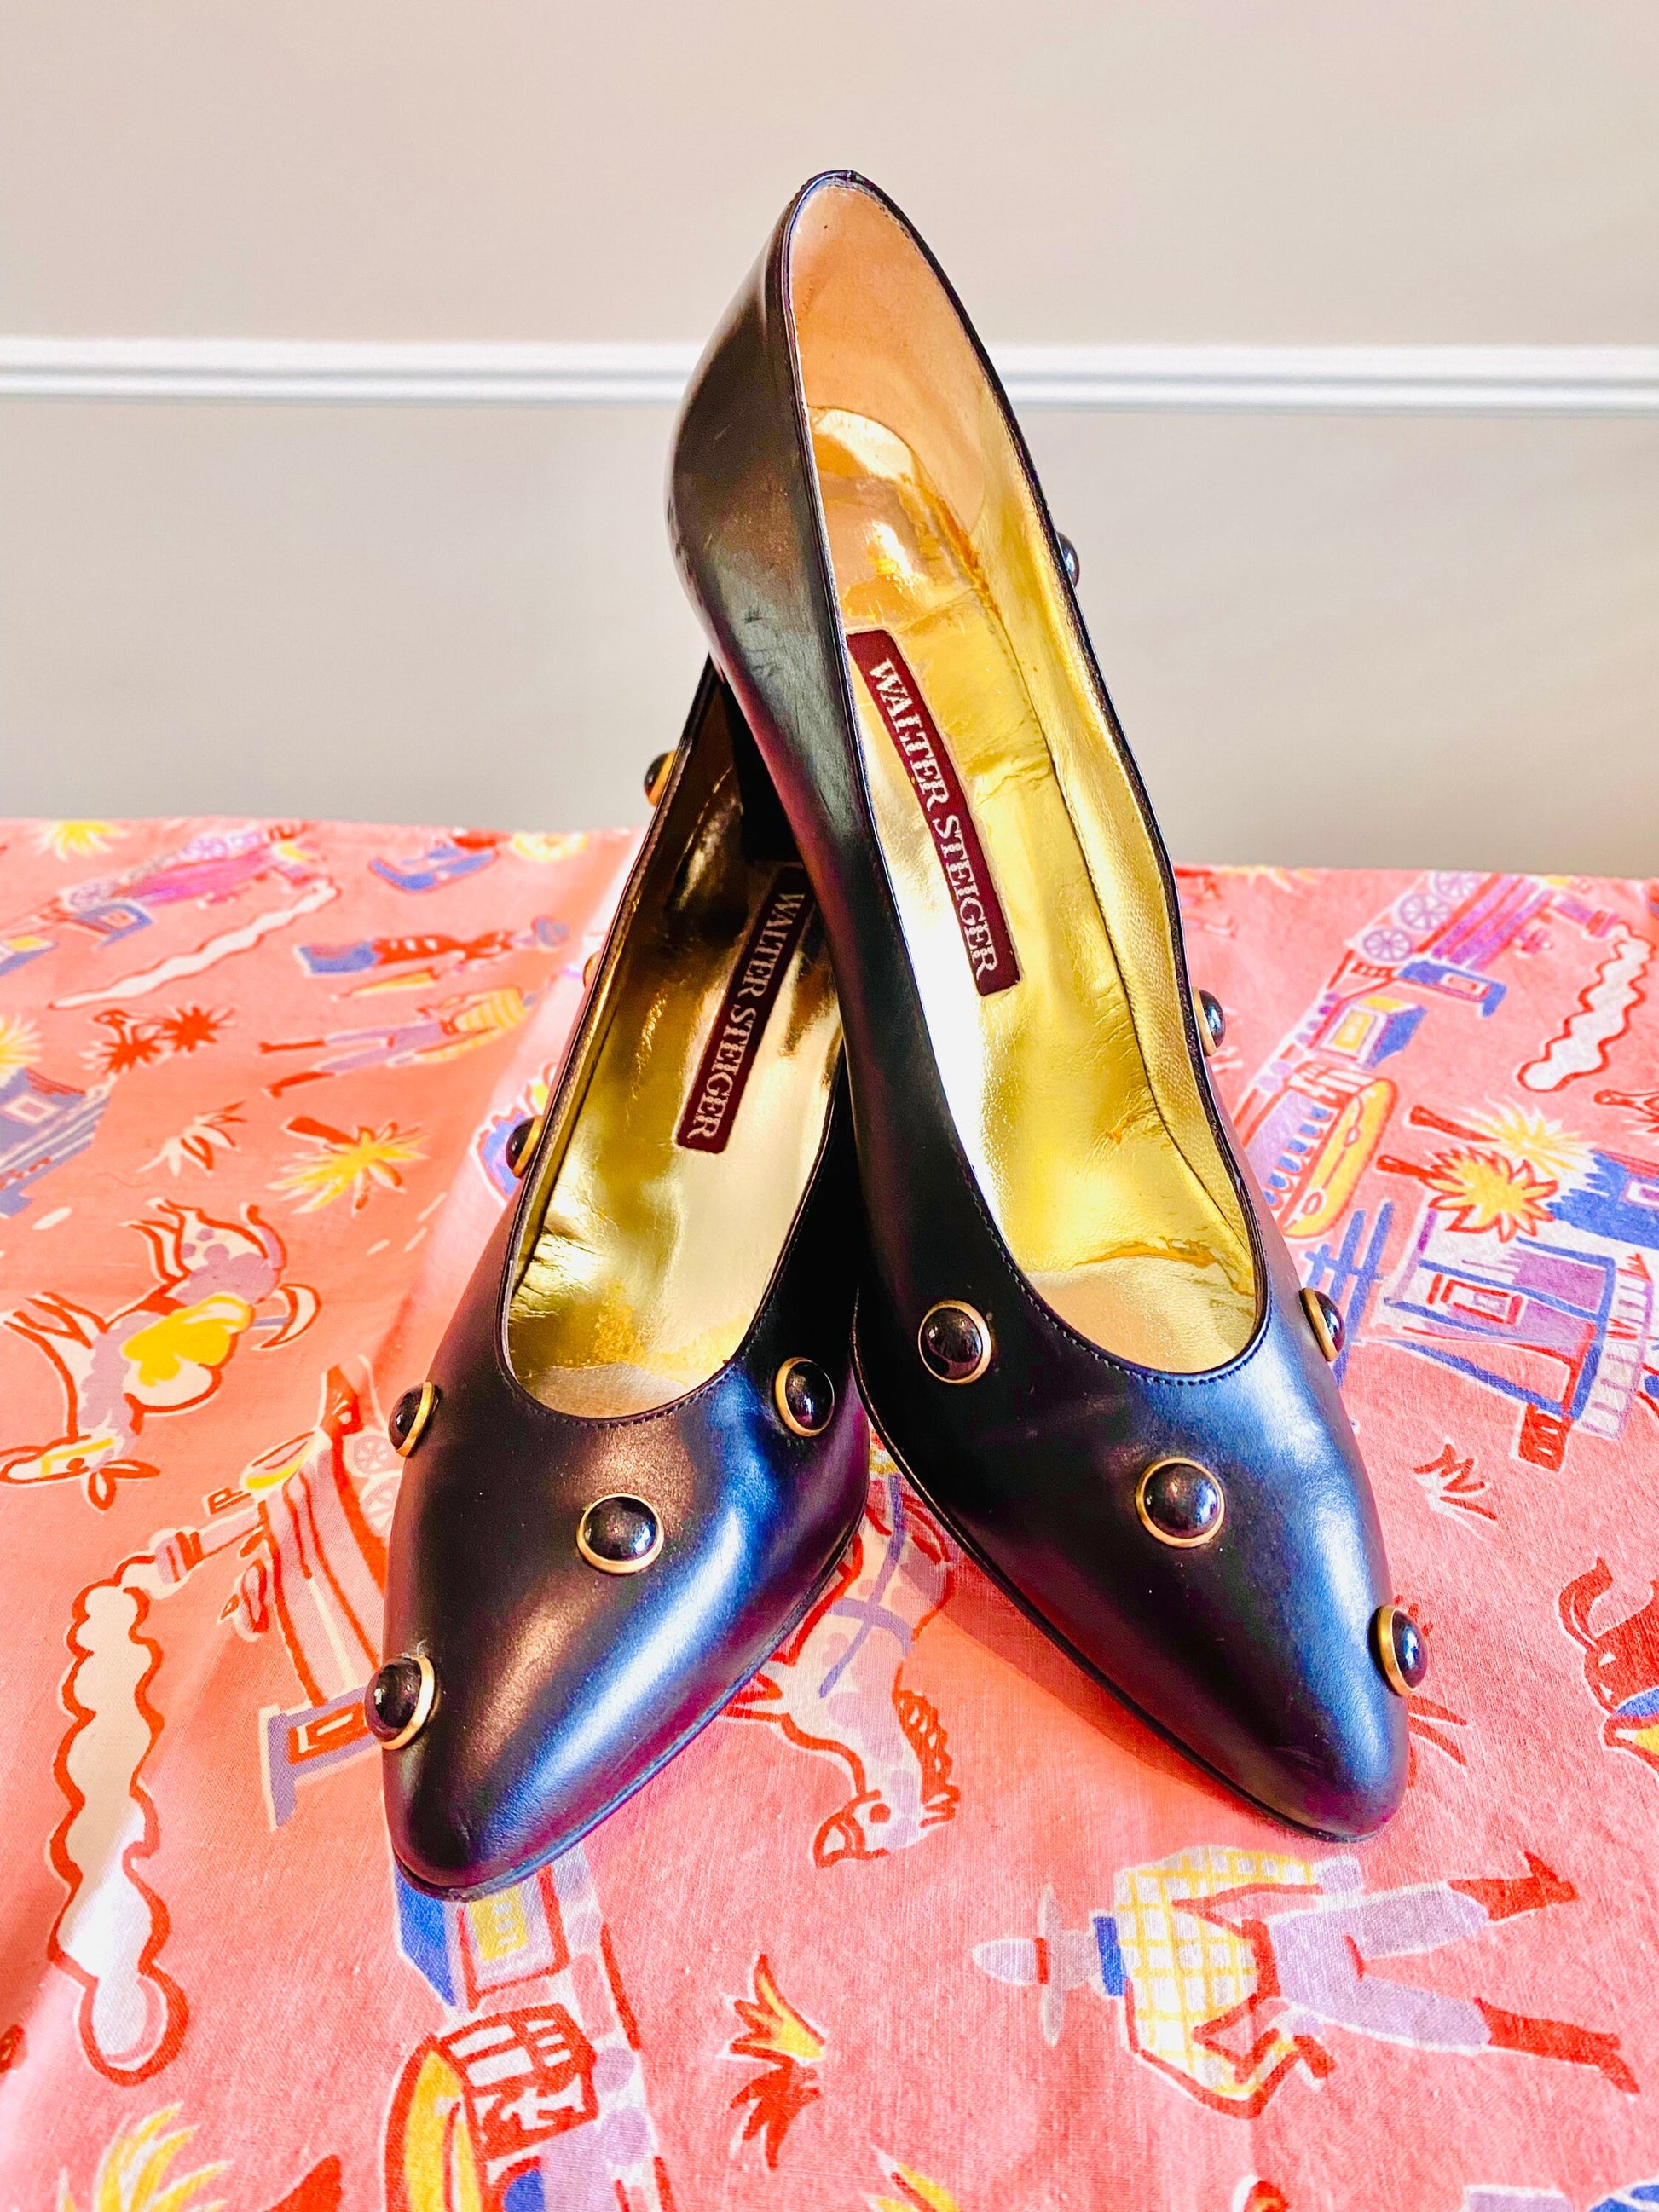 Vintage 1980s Studded Stilettos / 80s high heels pumps black leather retro pointed toe Walter Steiger luxury label Size 7.5